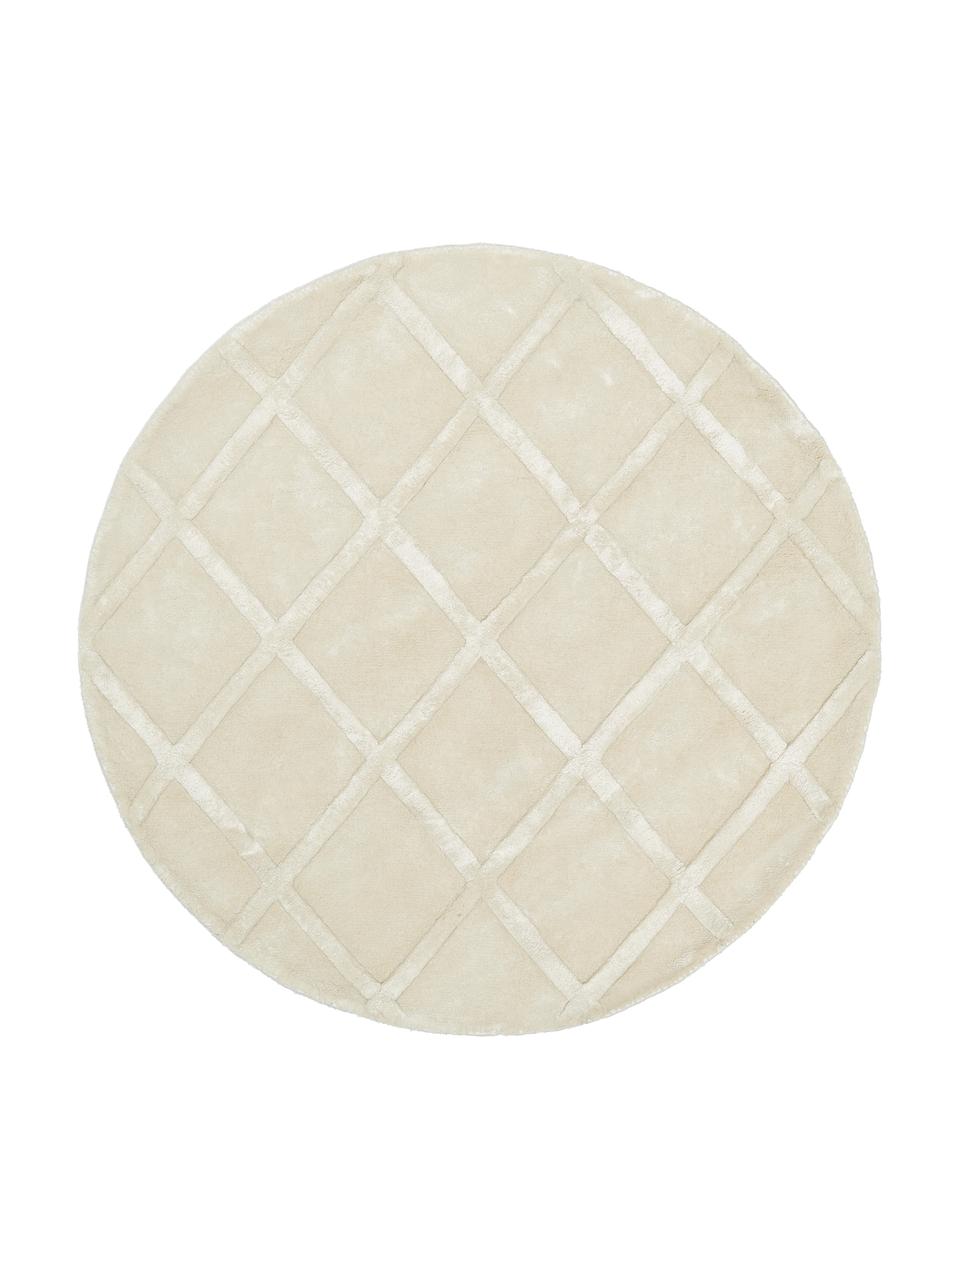 Tapis rond blanc crème viscose Shiny, Crème, Ø 120 cm (taille S)